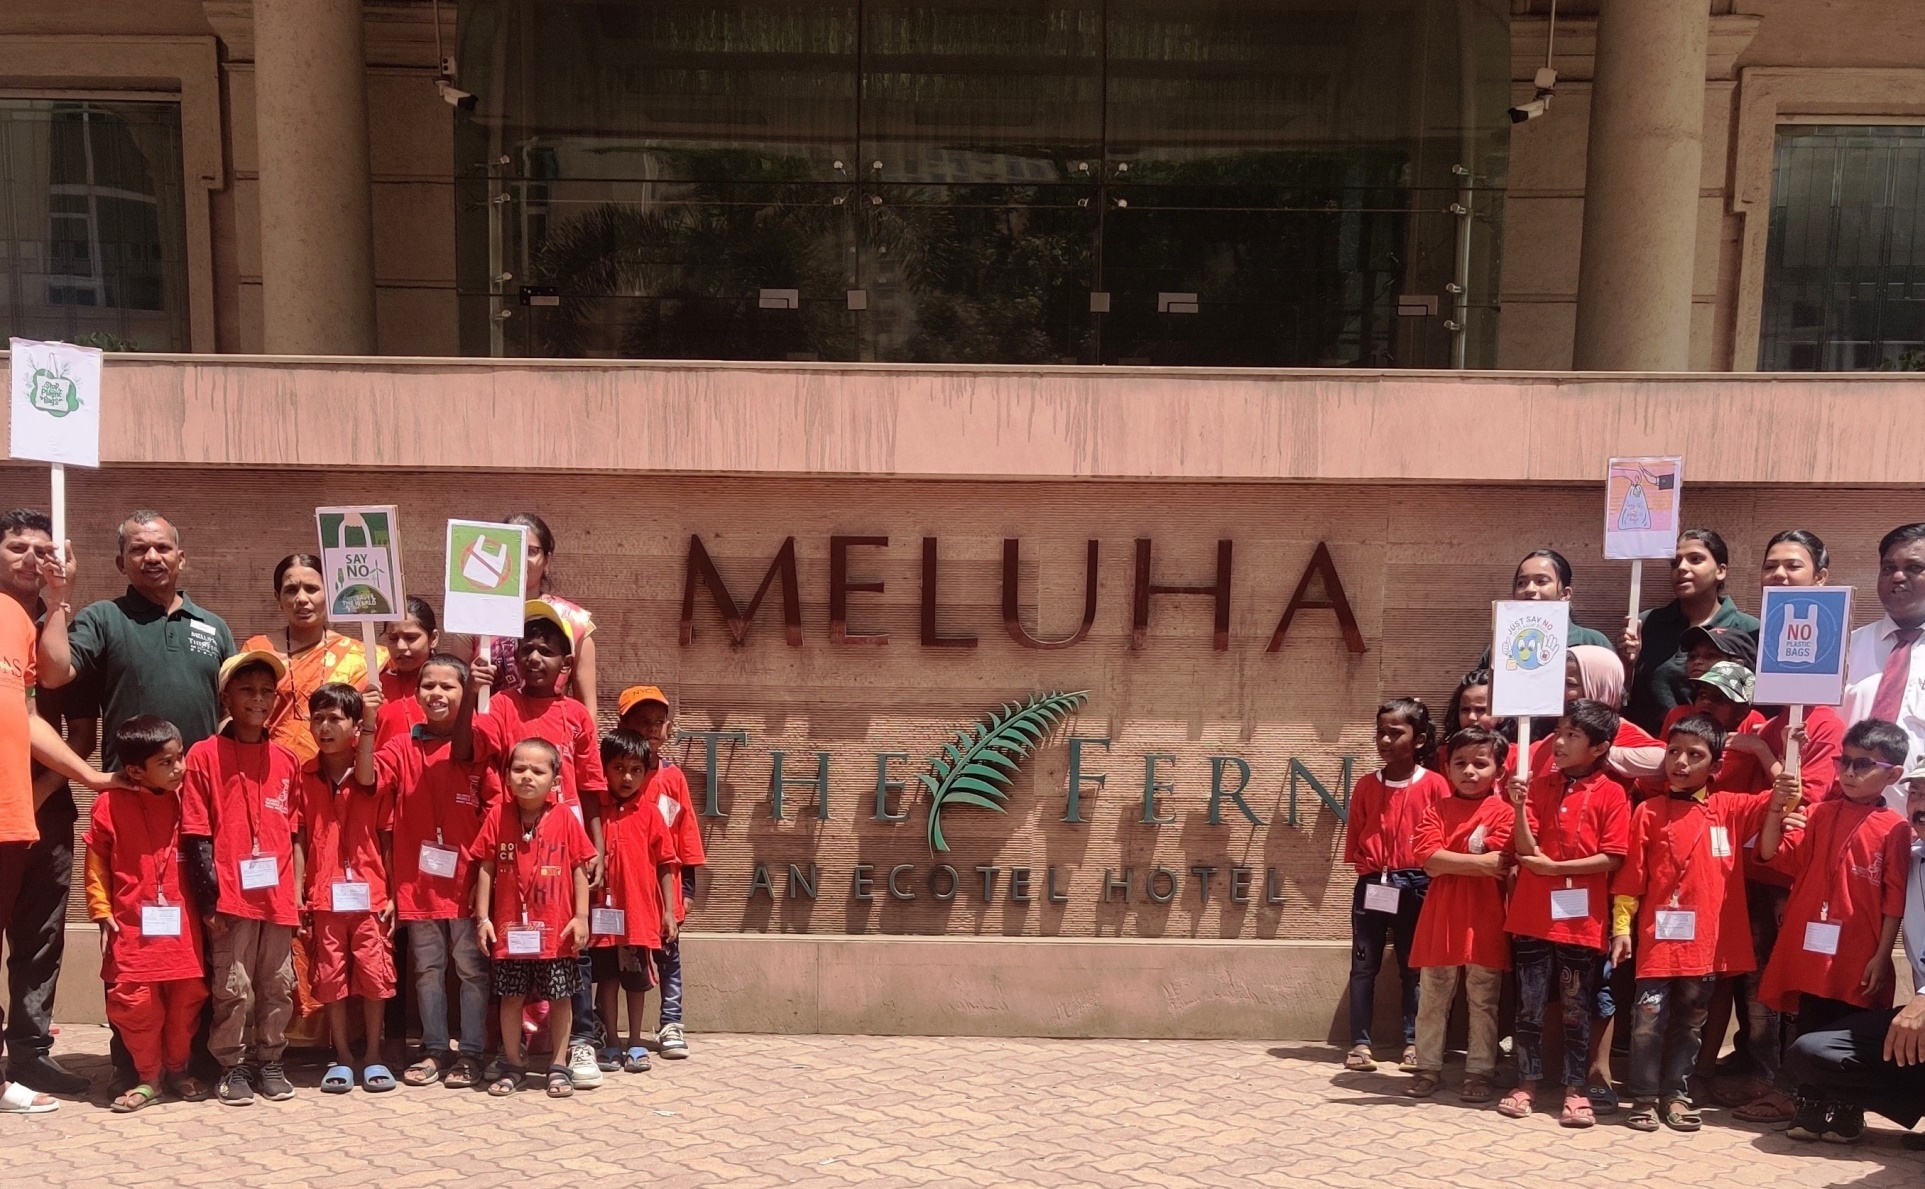 Meluha, The Fern, Mumbai Celebrates Environment Week